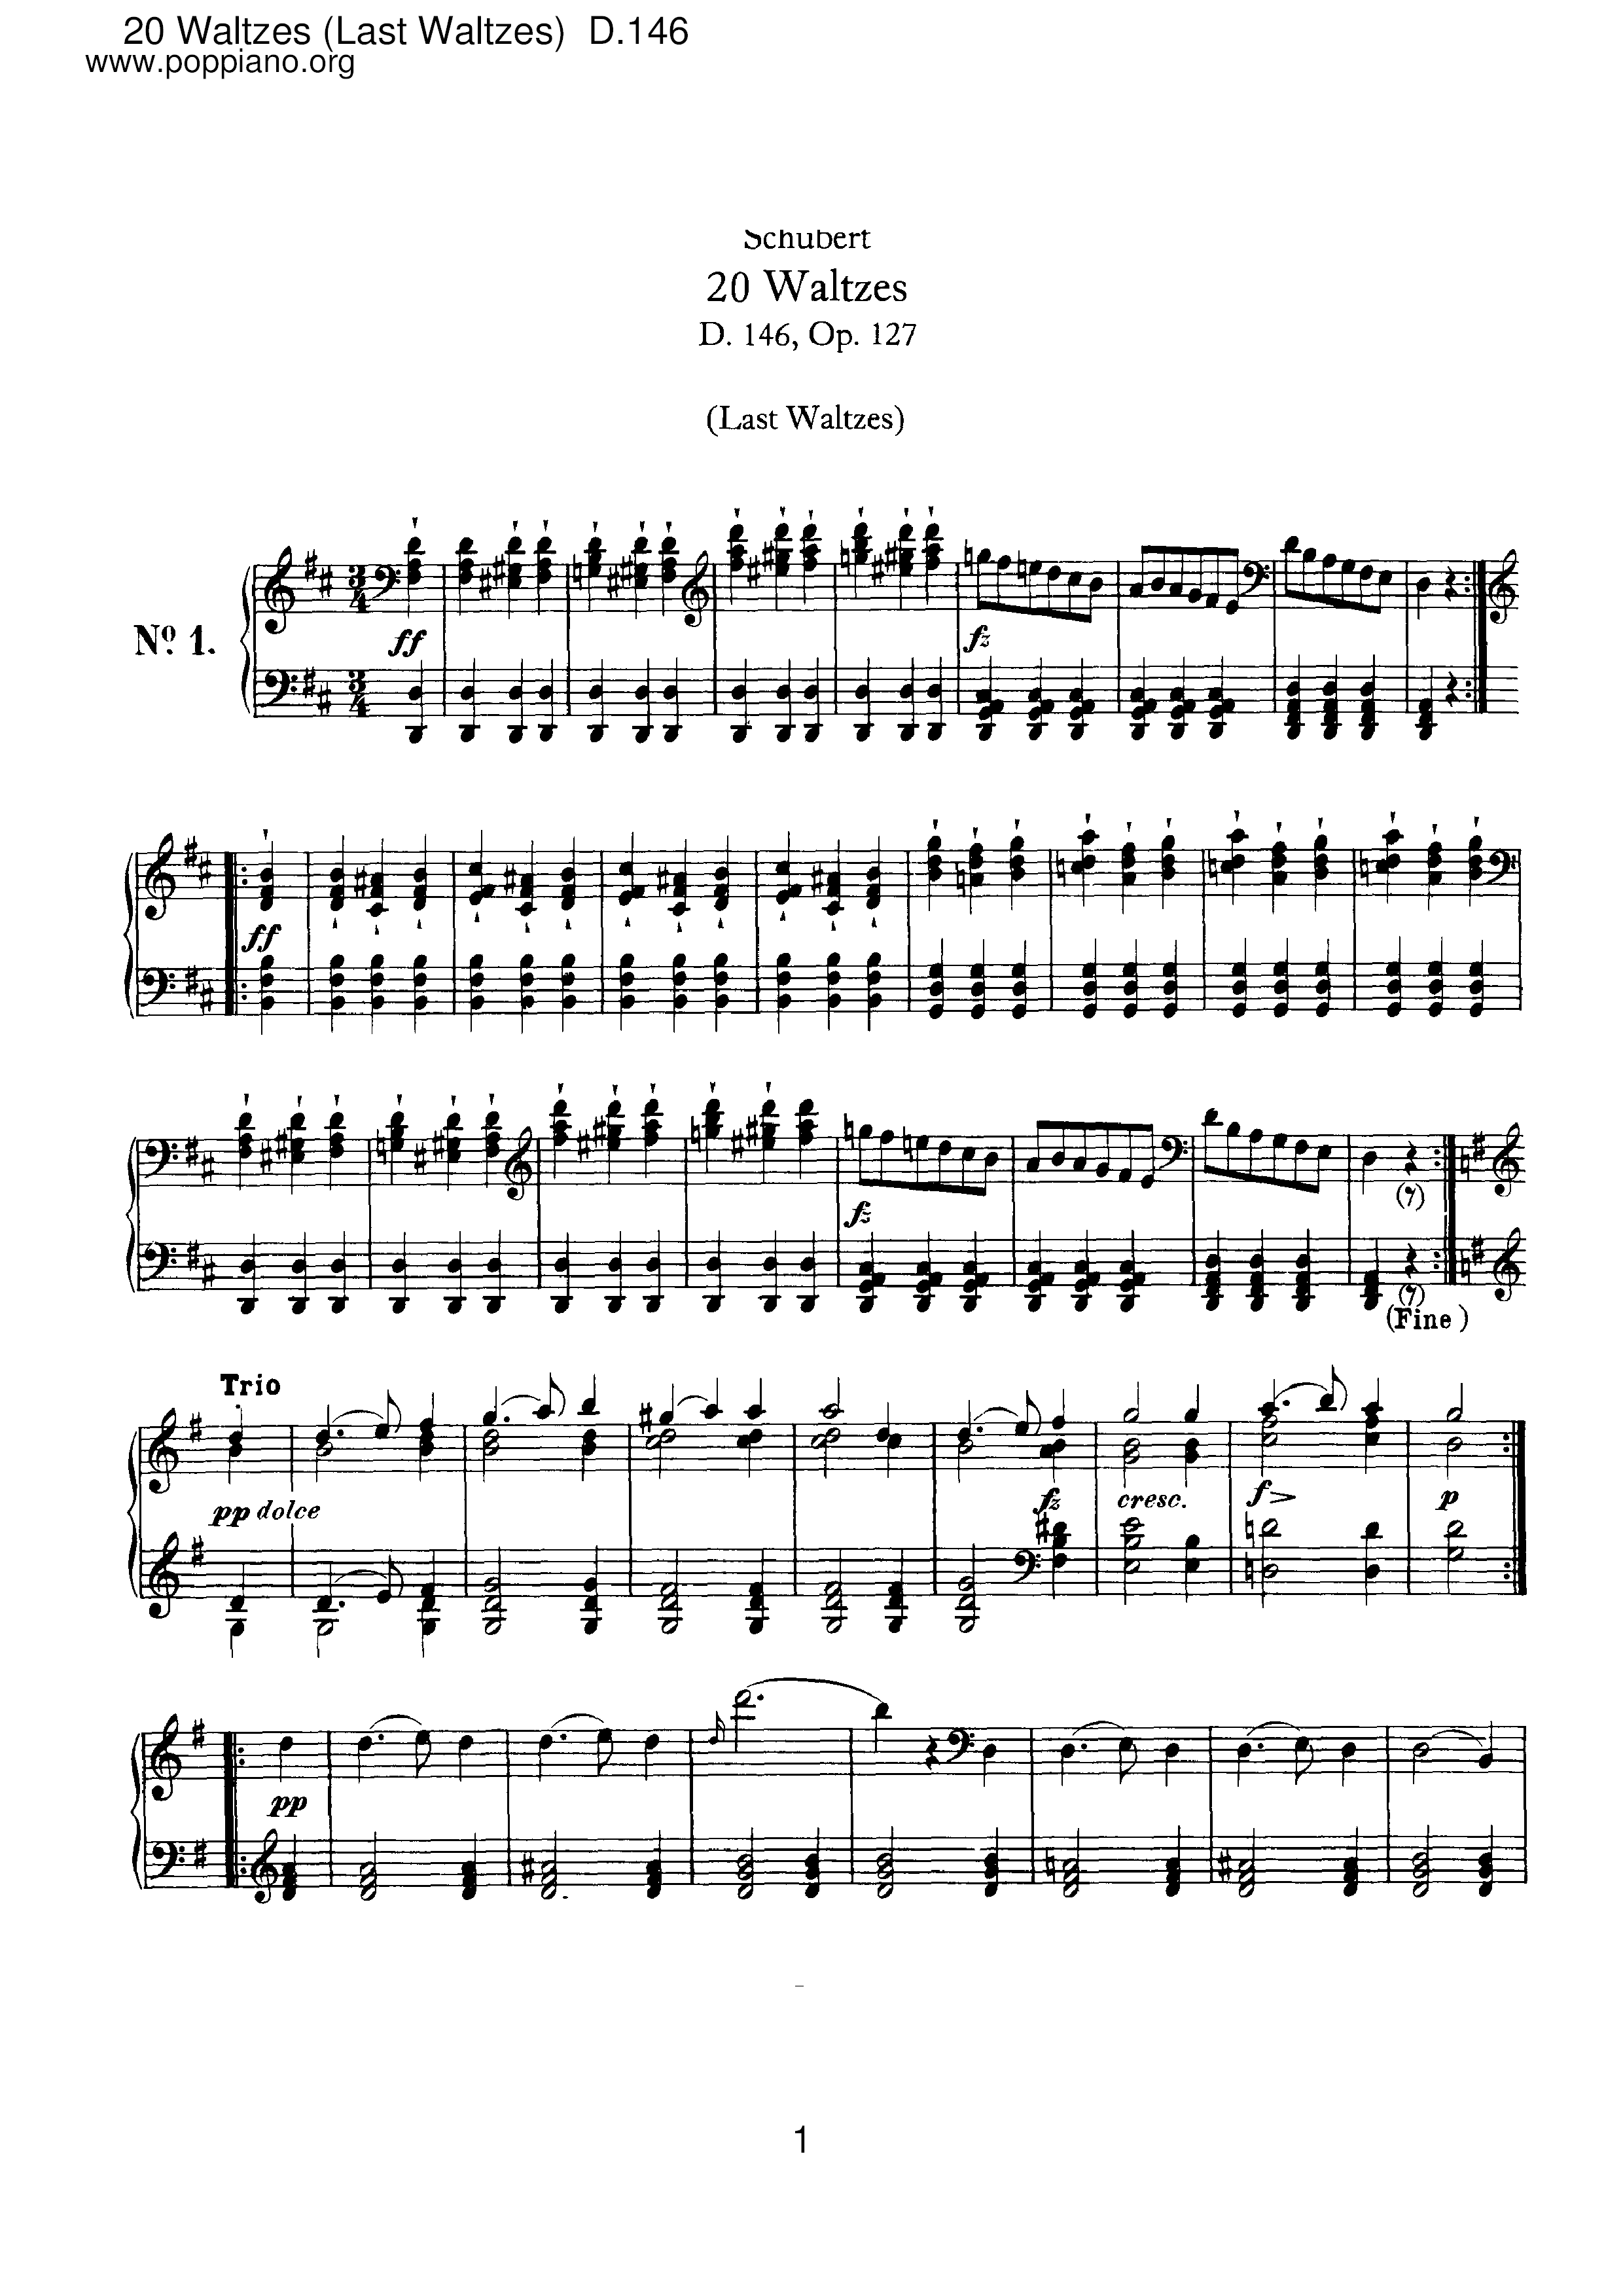 20 Waltzes (Last Waltzes), D.146 (Op.127)琴譜